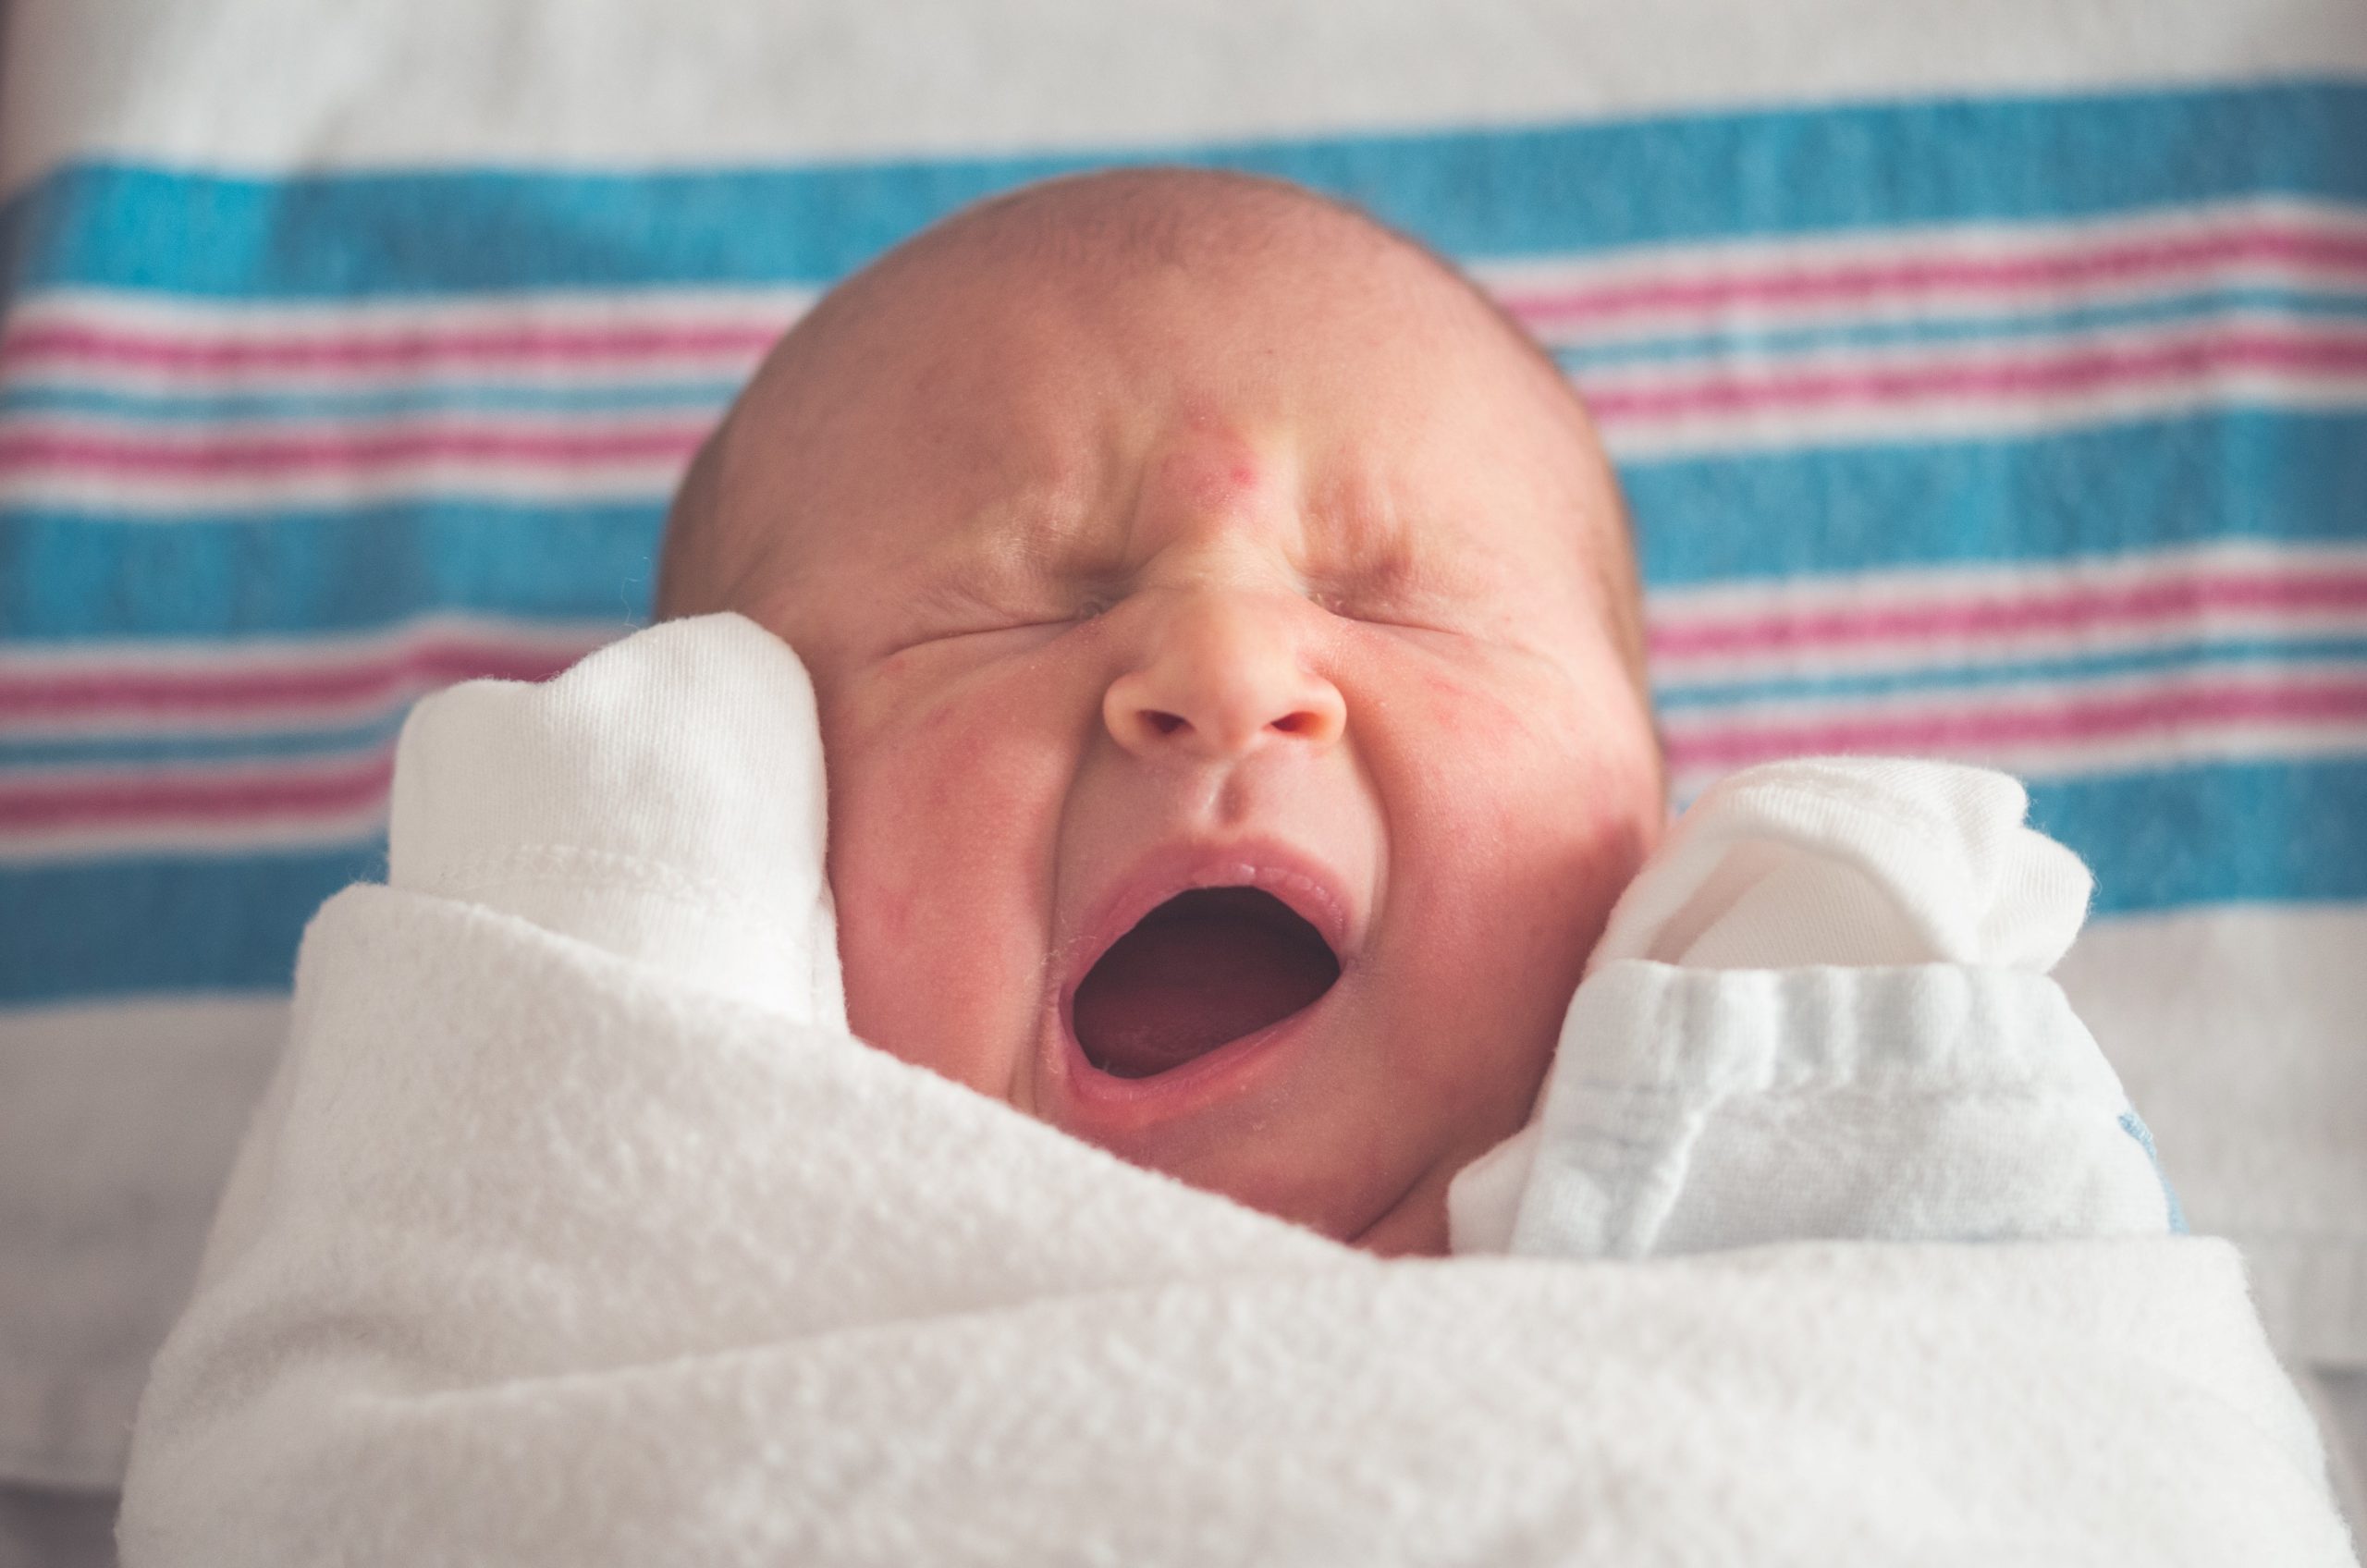 A swaddled, yawning baby. The image relates to fertility developments.